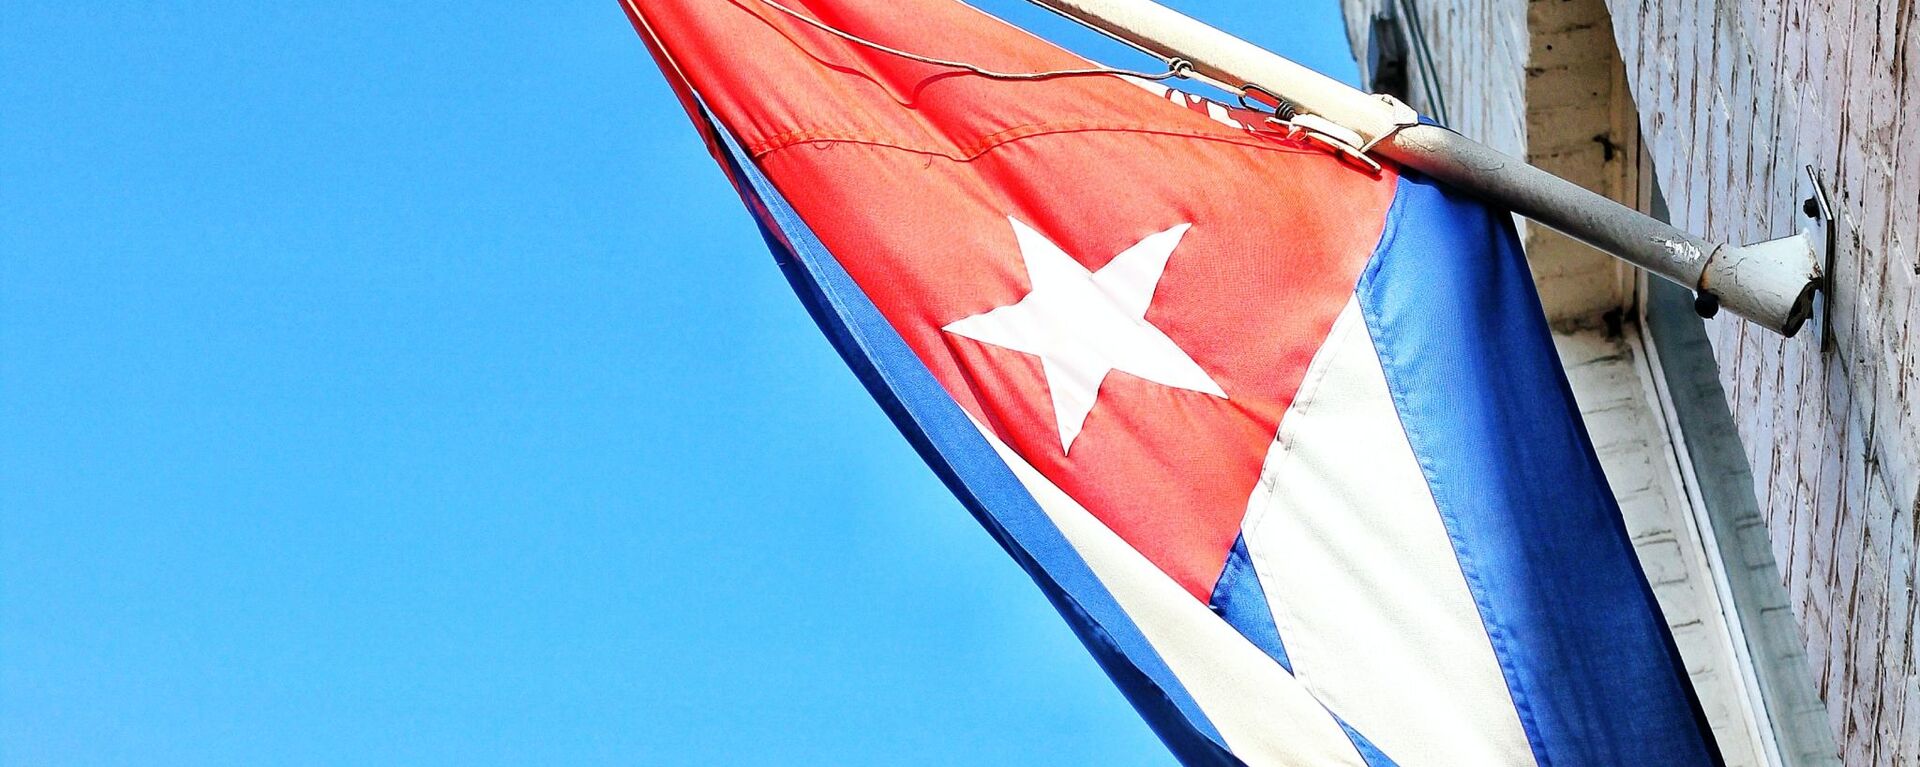 La bandera de Cuba - Sputnik Mundo, 1920, 28.01.2021